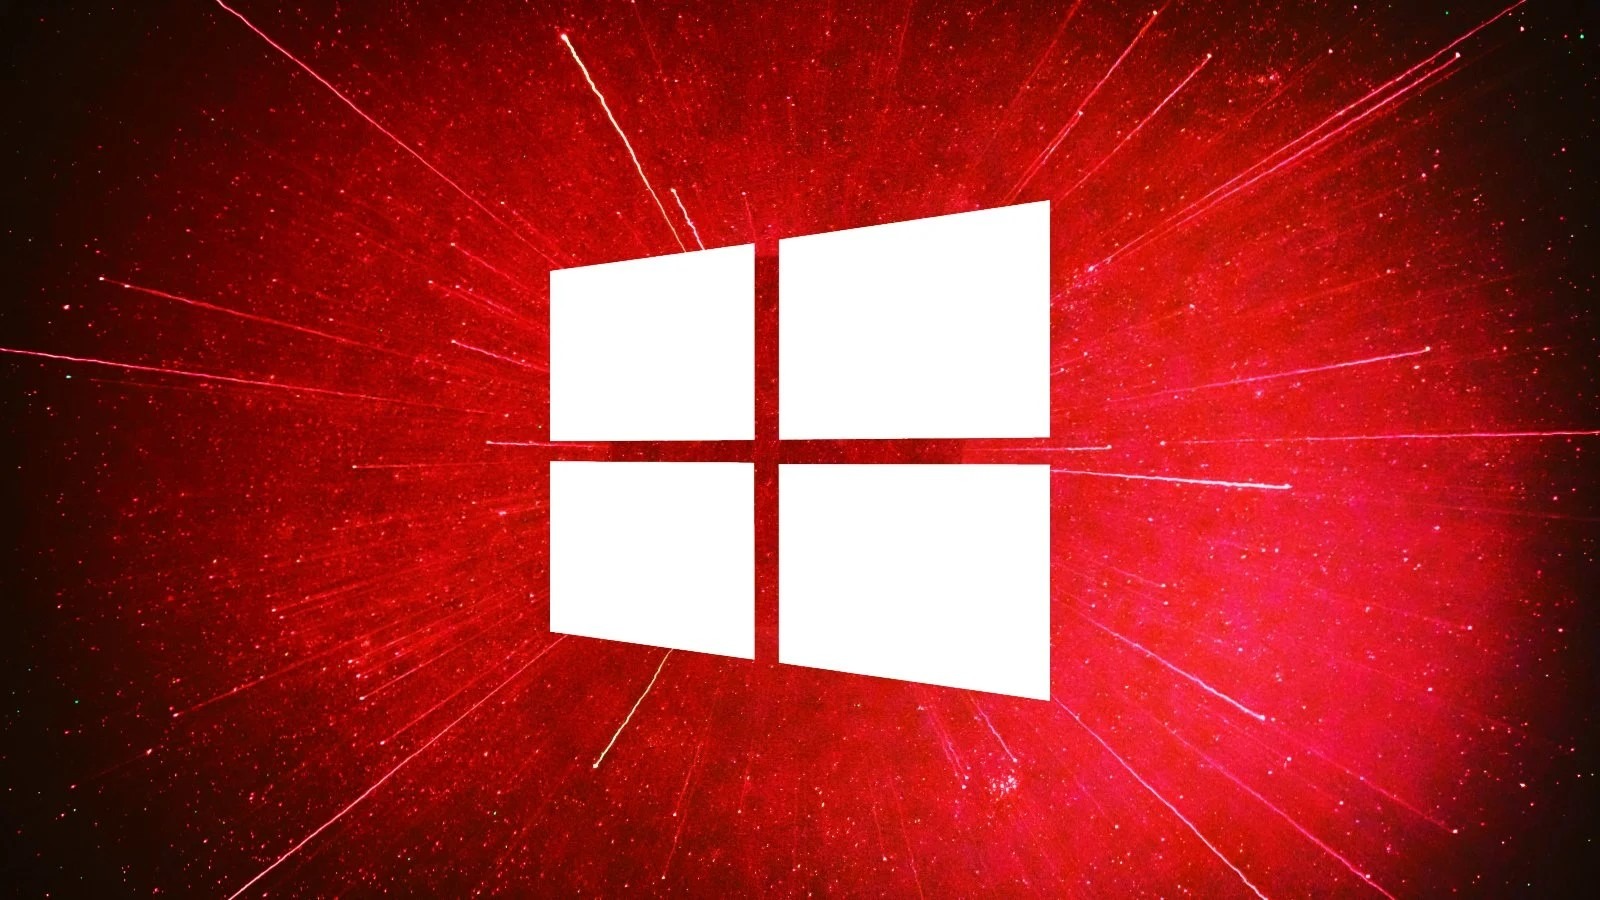 alt=Windows 10 update progress at 1%, Windows operating system.